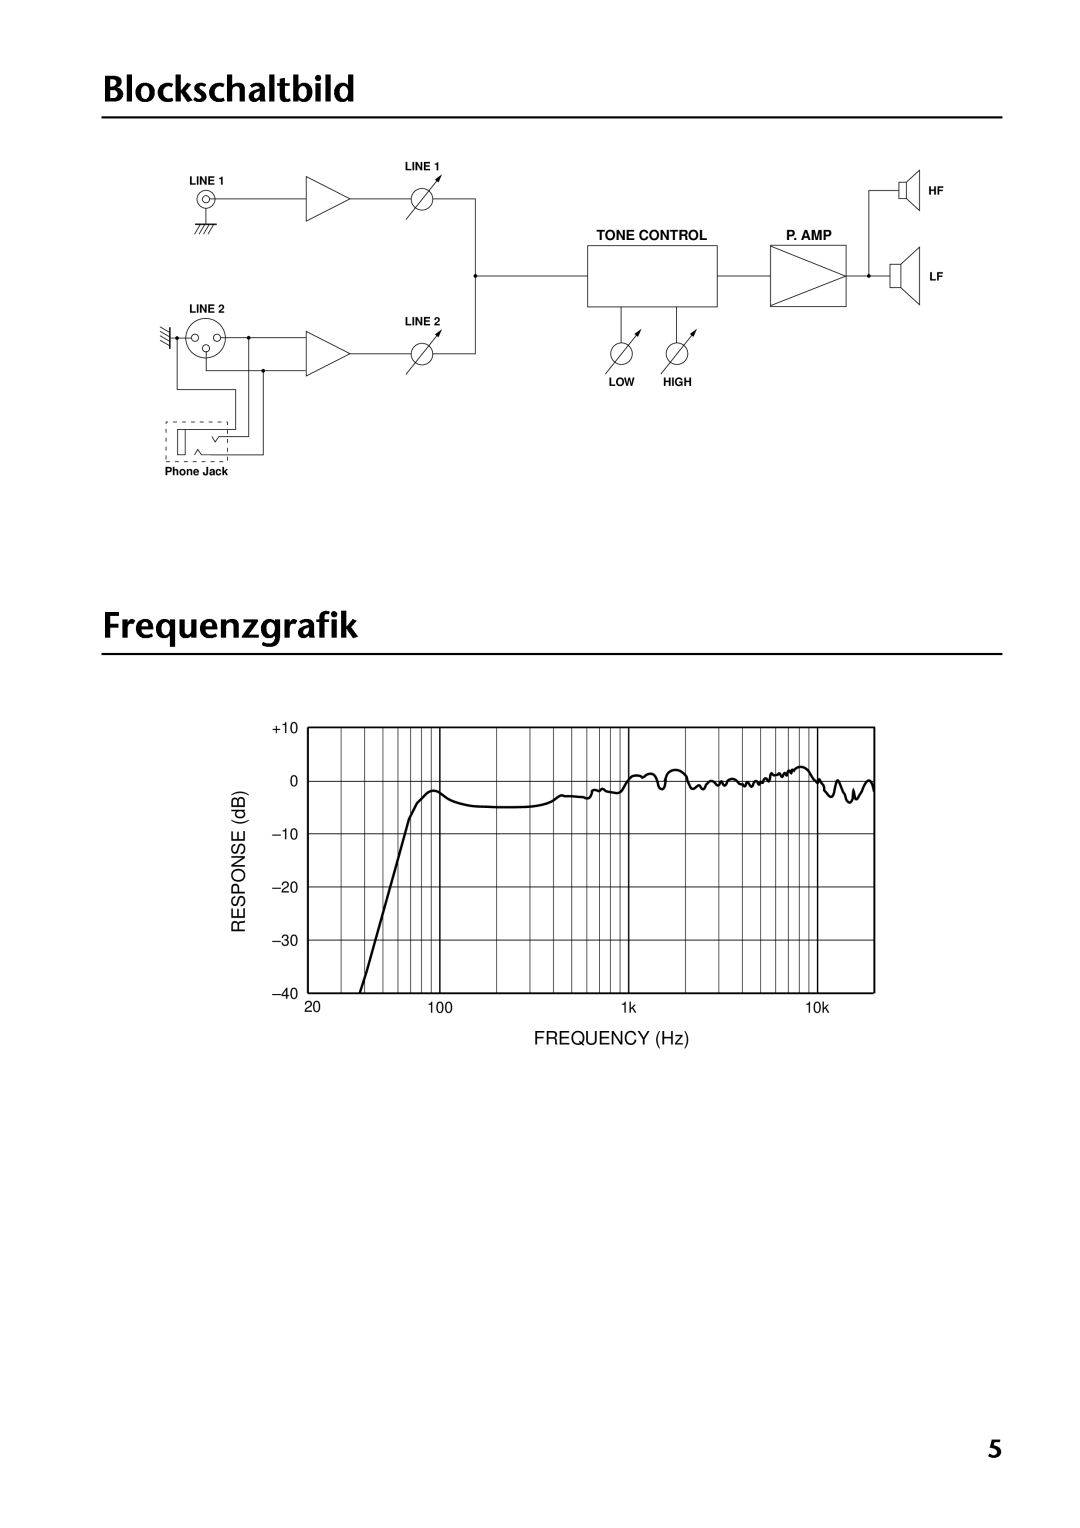 Yamaha MSP3 Blockschaltbild, Frequenzgraﬁk, RESPONSE dB, FREQUENCY Hz, +10 0 –10 –20 –30 –40, Tone Control, P. Amp, Line 